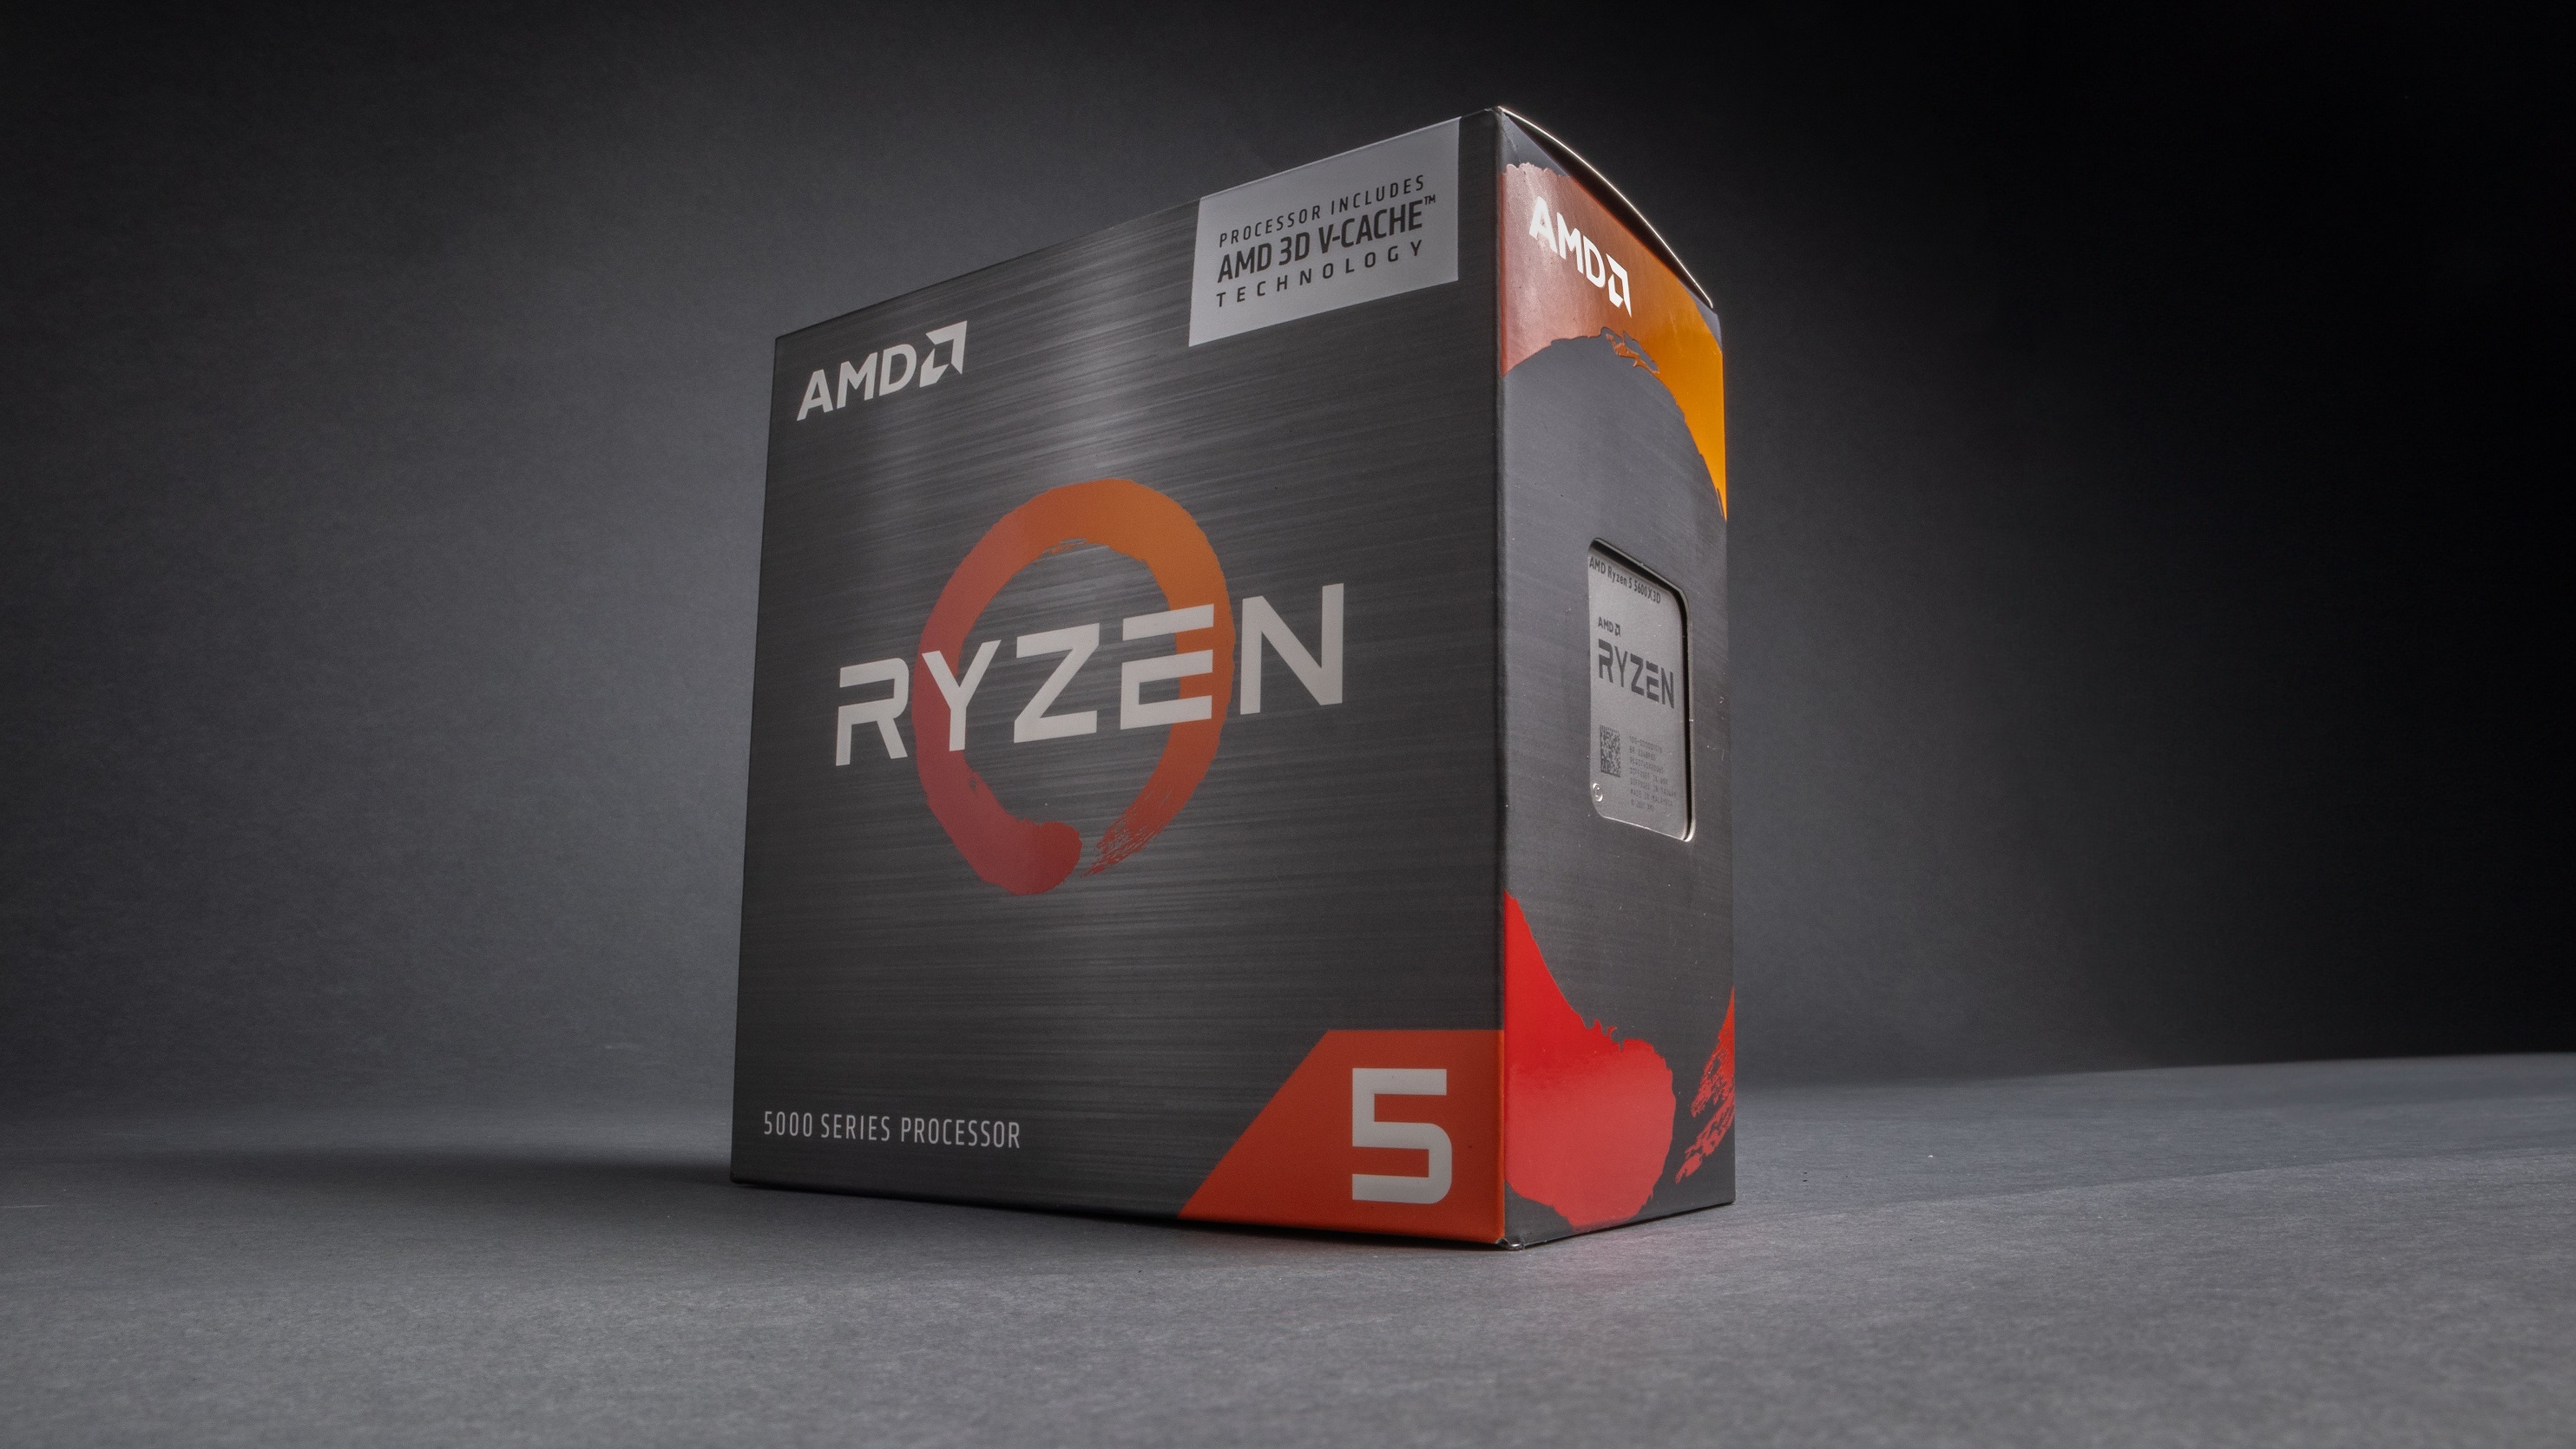 AMD Ryzen 5 X3D review roundup: a budget gaming beast